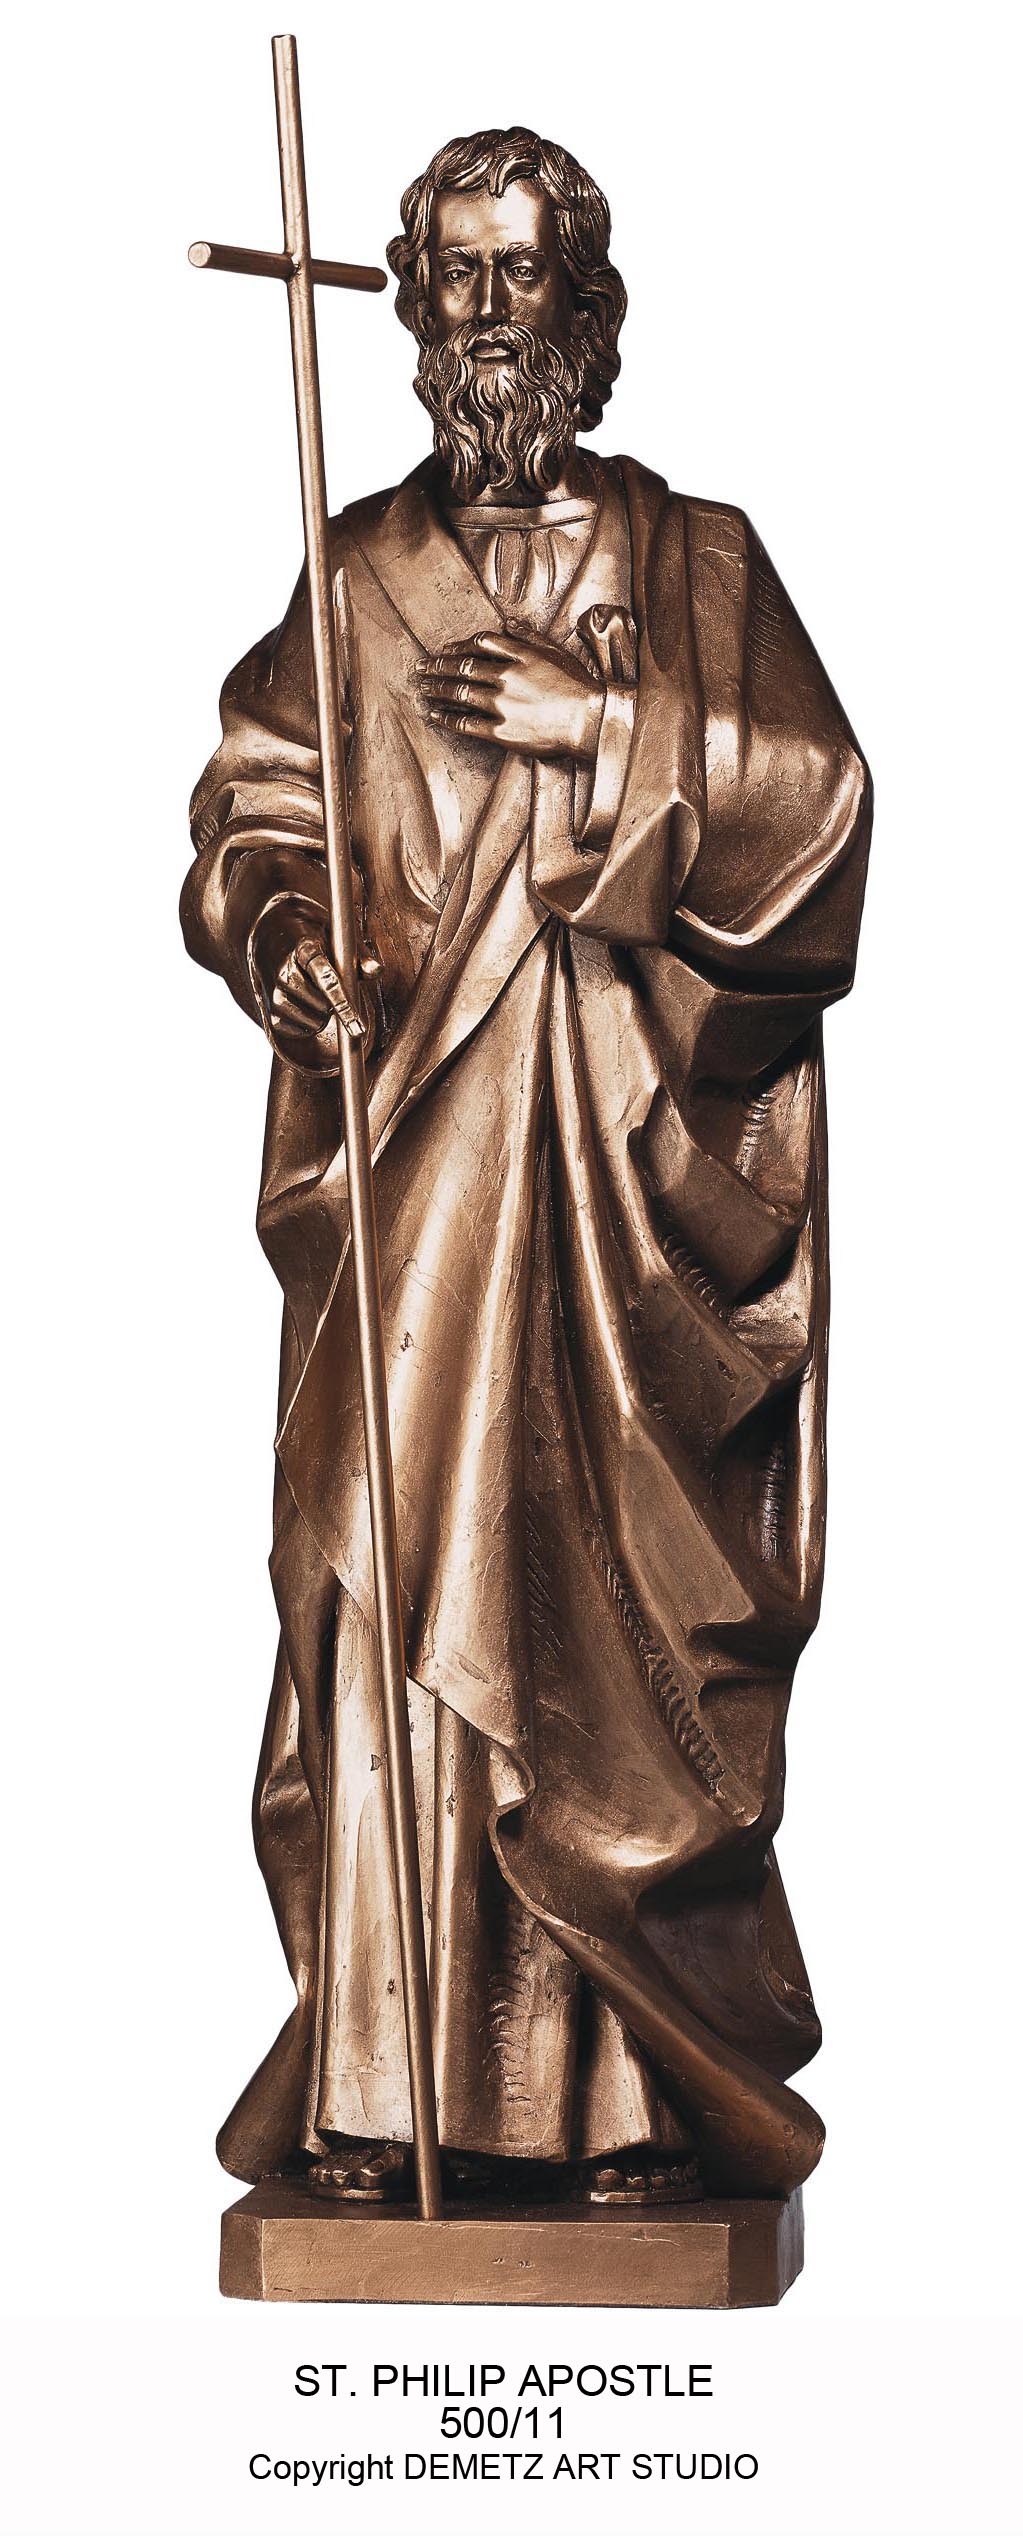 Sisters of Carmel: St. Scholastica Statue